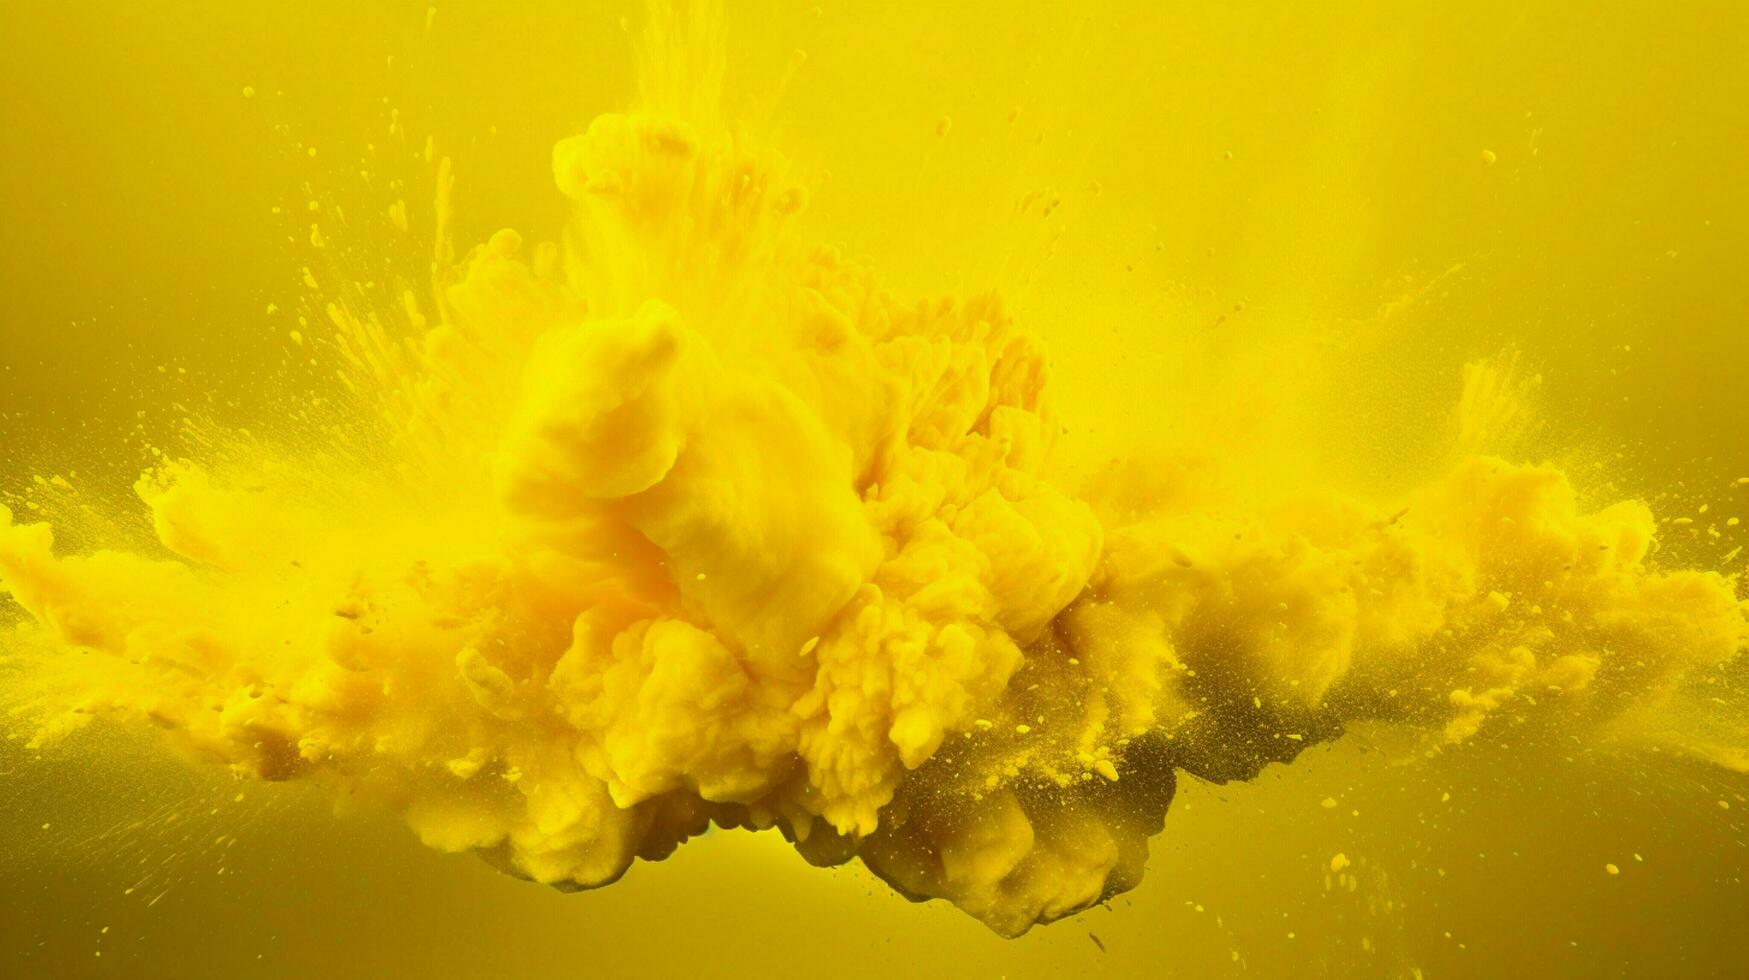 ai generado limón amarillo color polvo chapoteo antecedentes foto